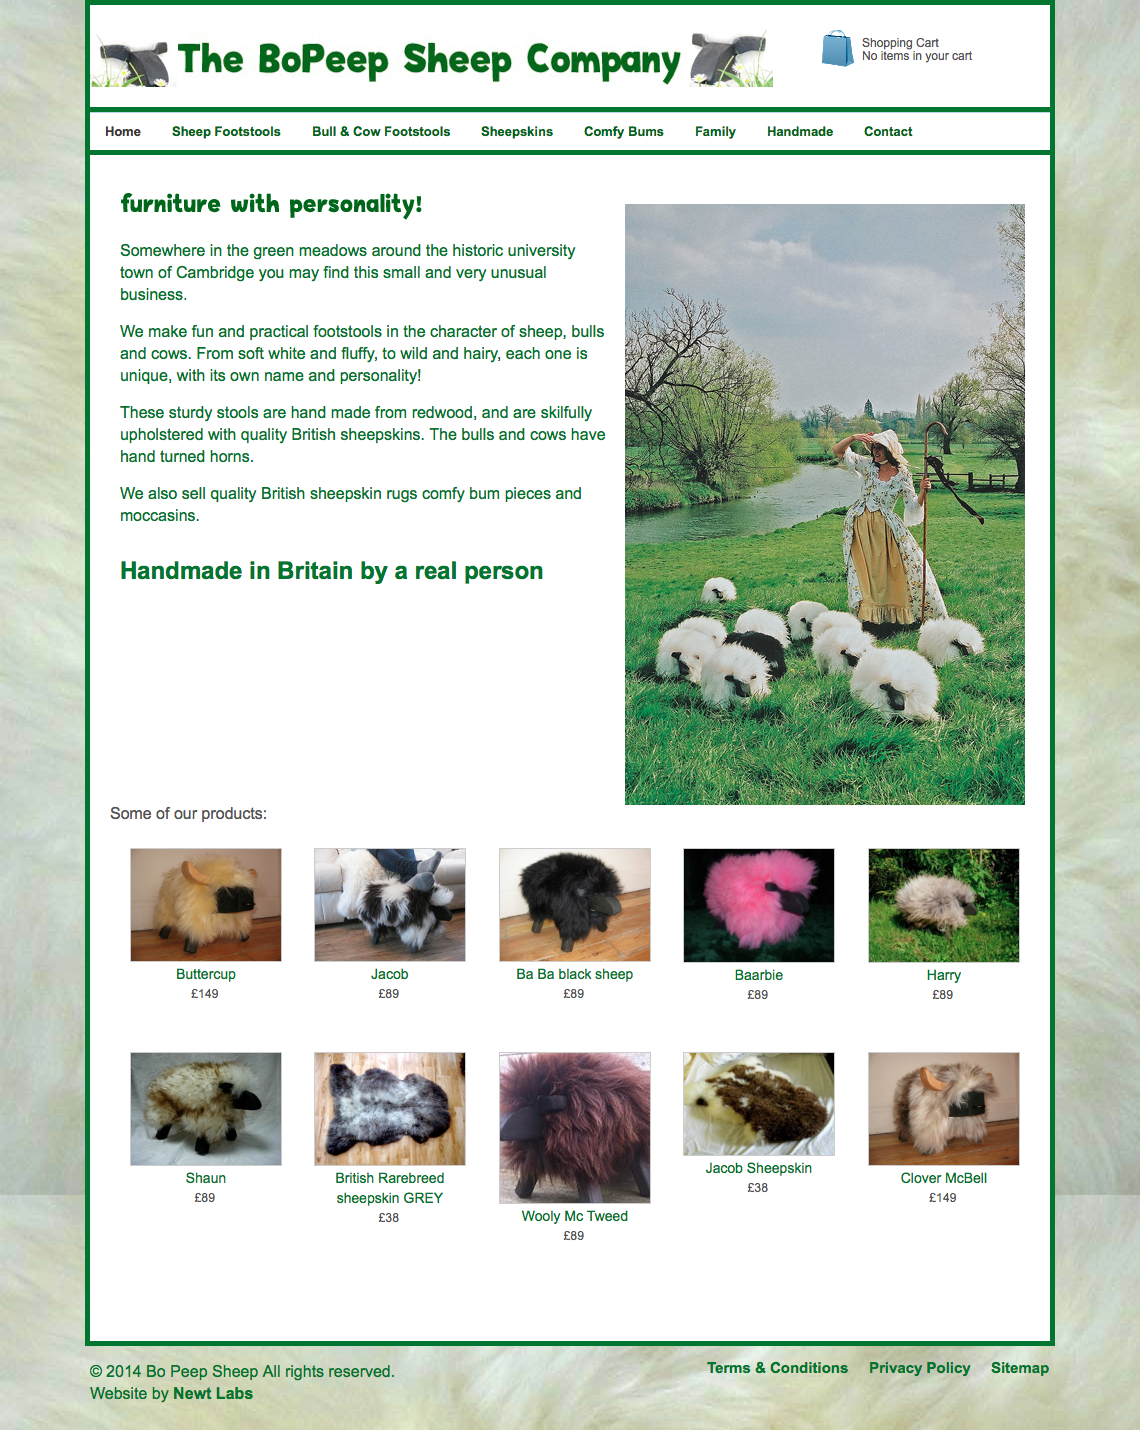 web design showing sheep footstalls